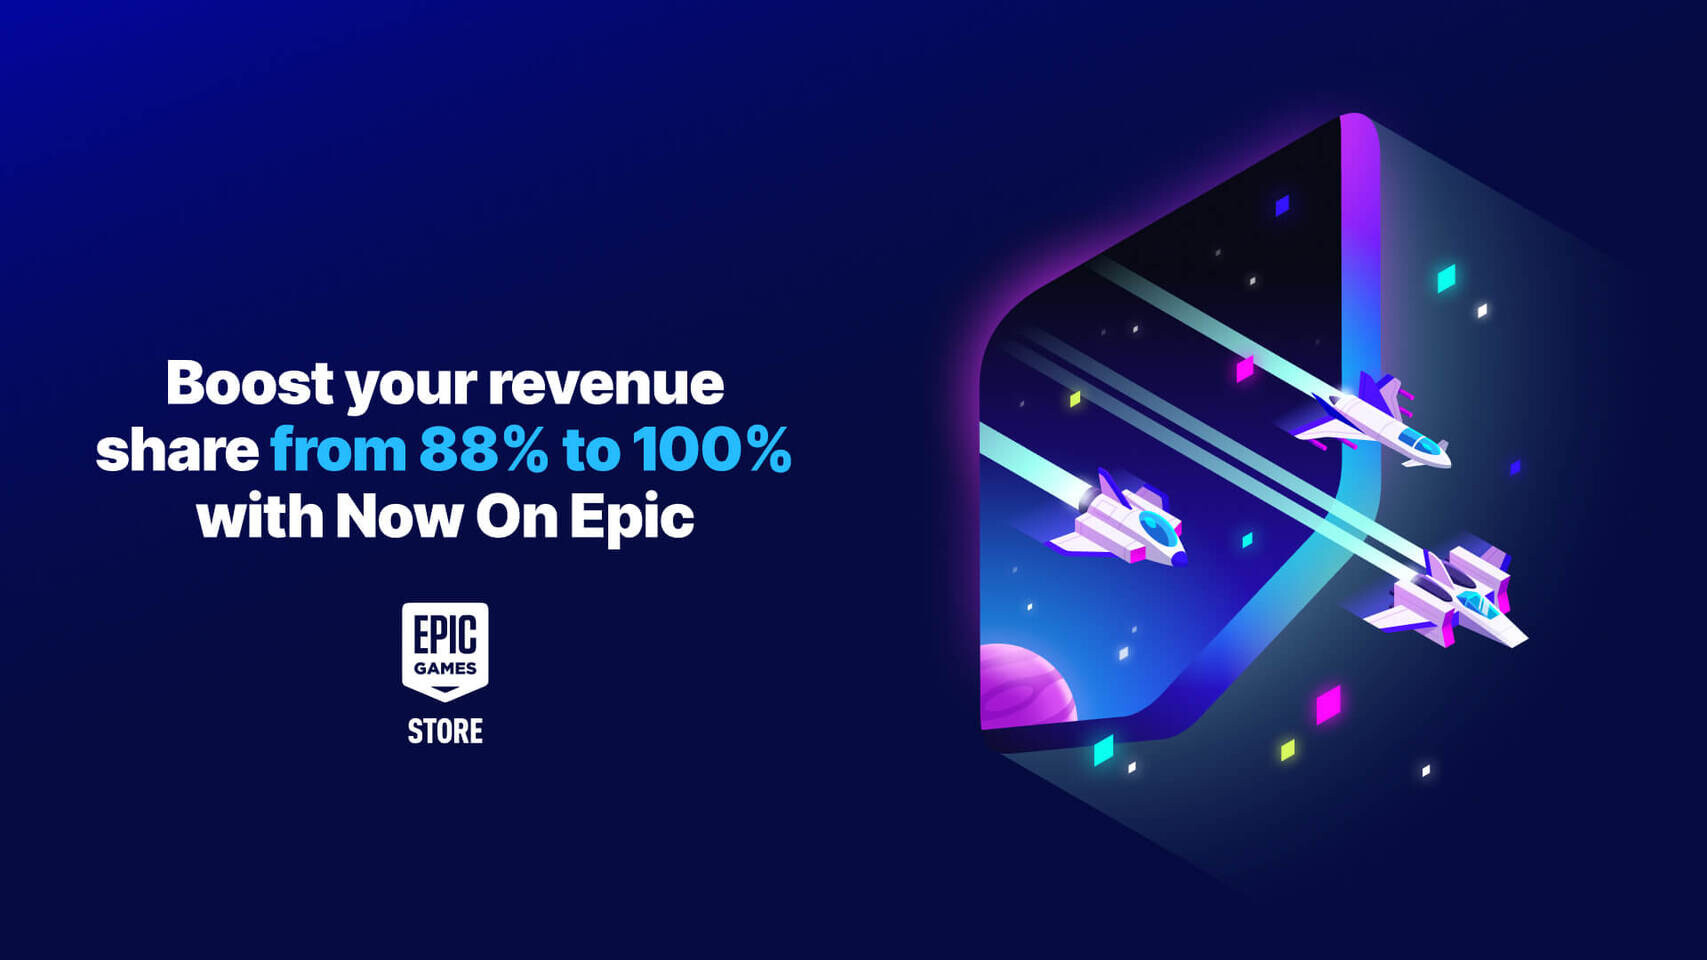 Epic Games Store Might Not Make Profit Until 2027